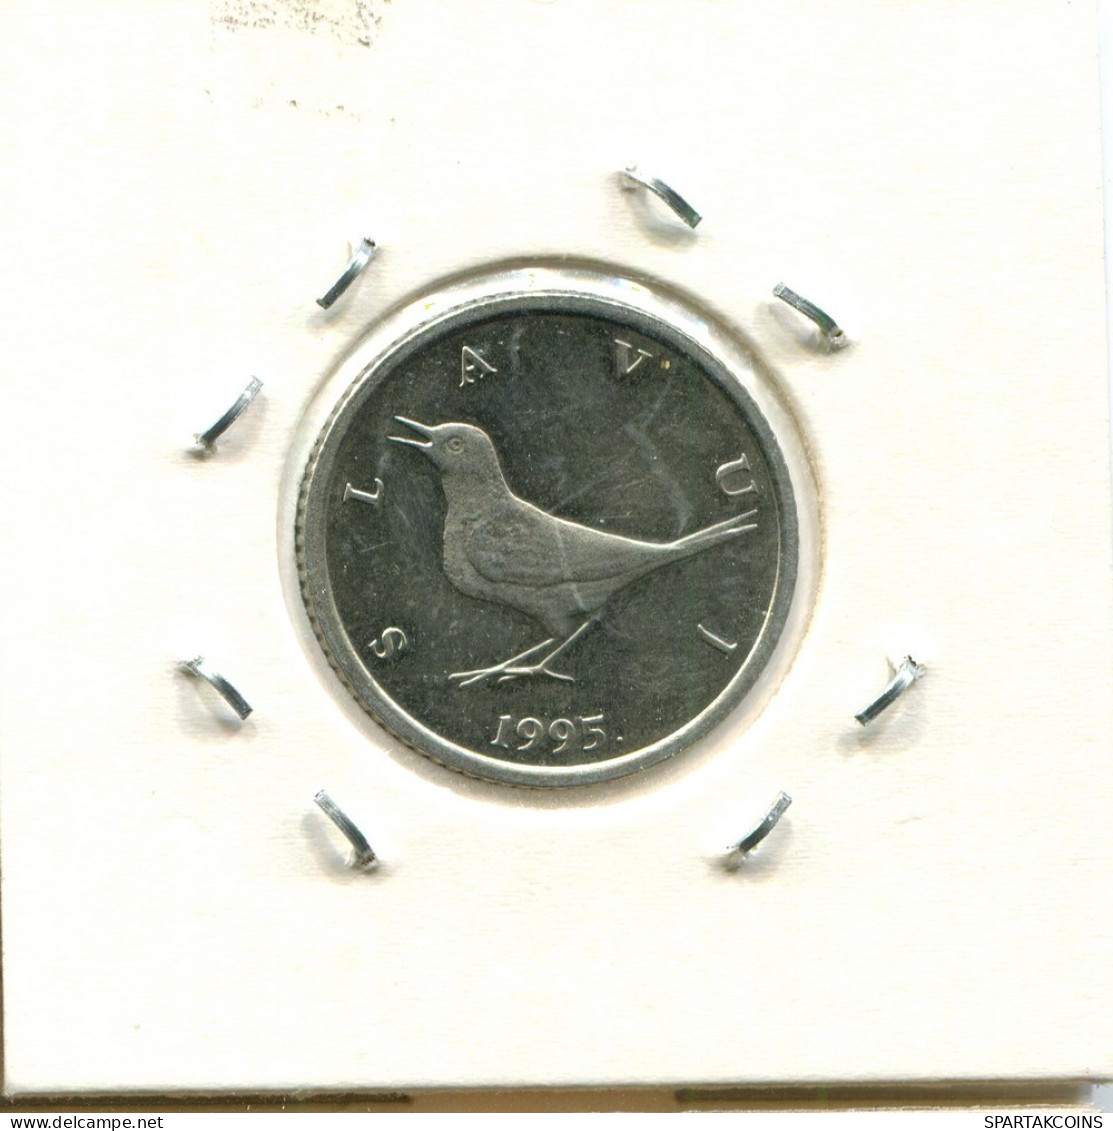 1 KUNA 1995 CROACIA CROATIA Moneda #AS553.E.A - Croatia